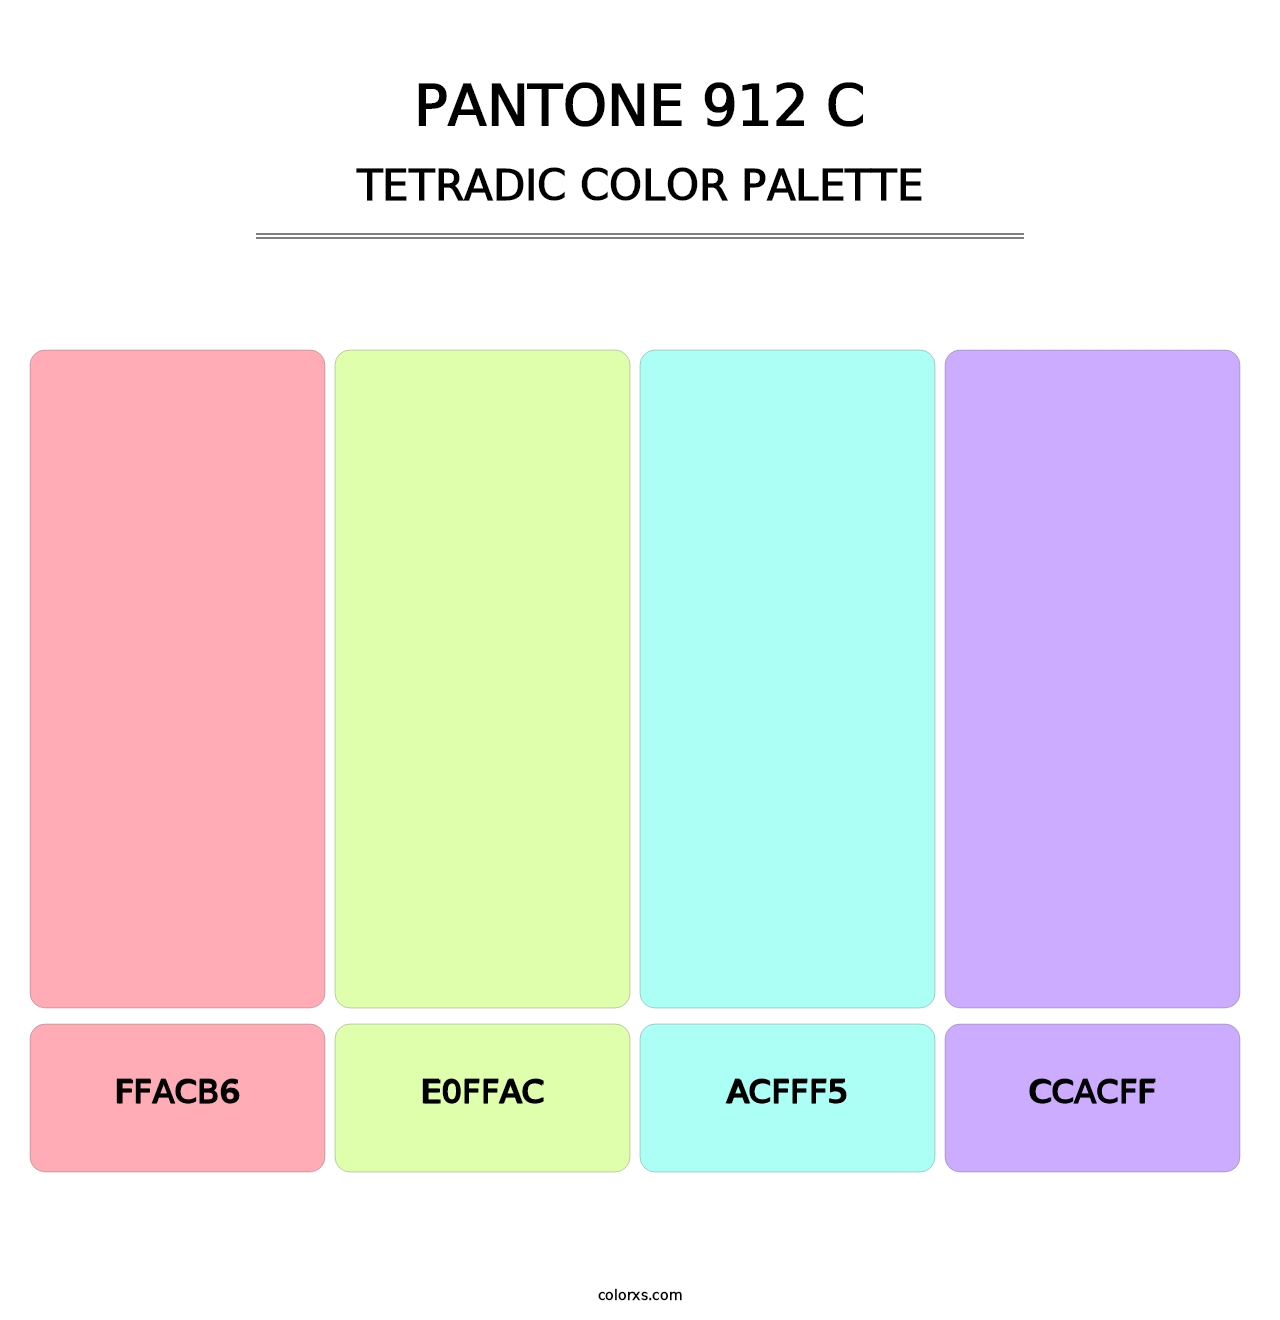 PANTONE 912 C - Tetradic Color Palette